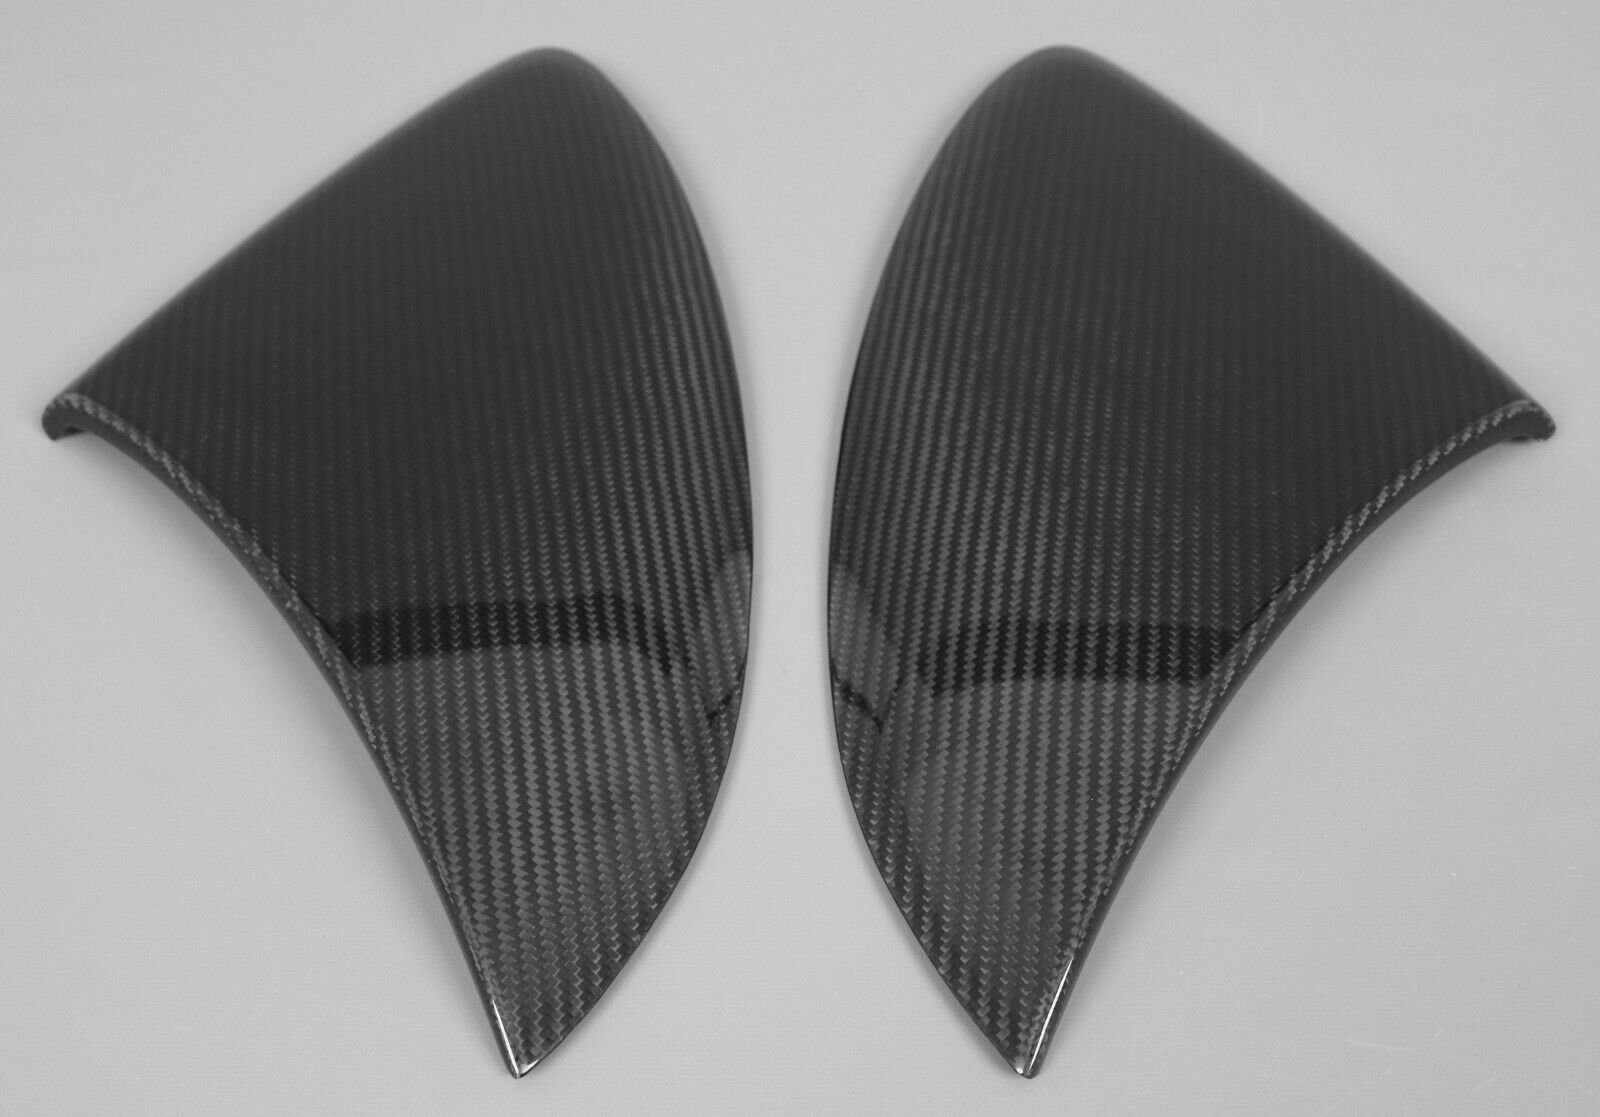 McLaren 540C, 570GT, 570S Replacement Side Air Intake Covers - 100% Carbon Fiber